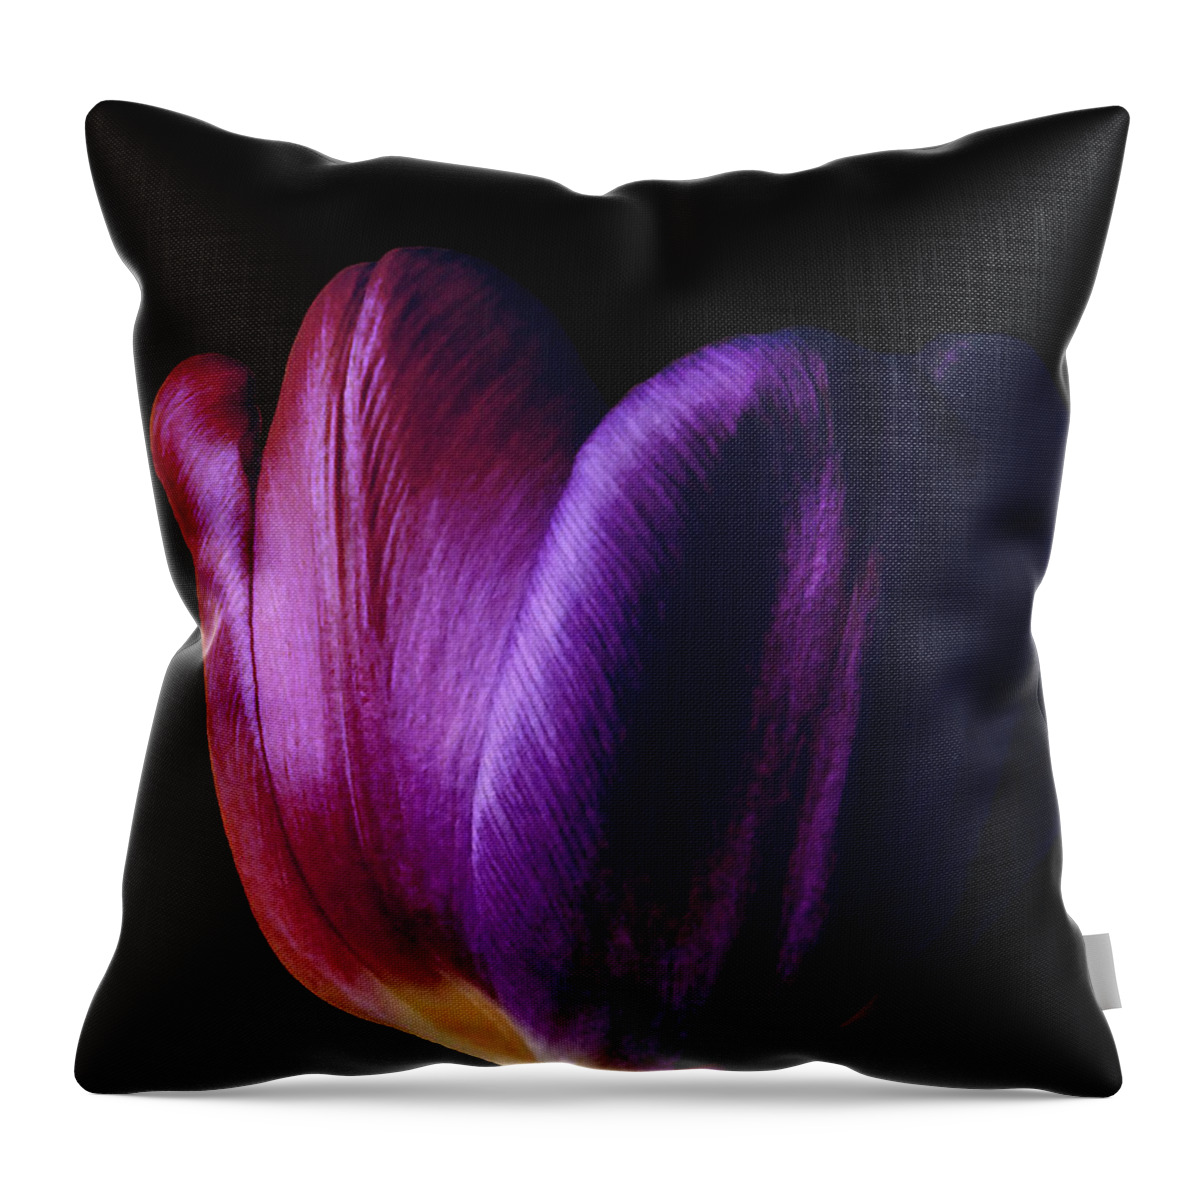 Tulip Throw Pillow featuring the photograph Colorful Tulip Macro by Johanna Hurmerinta